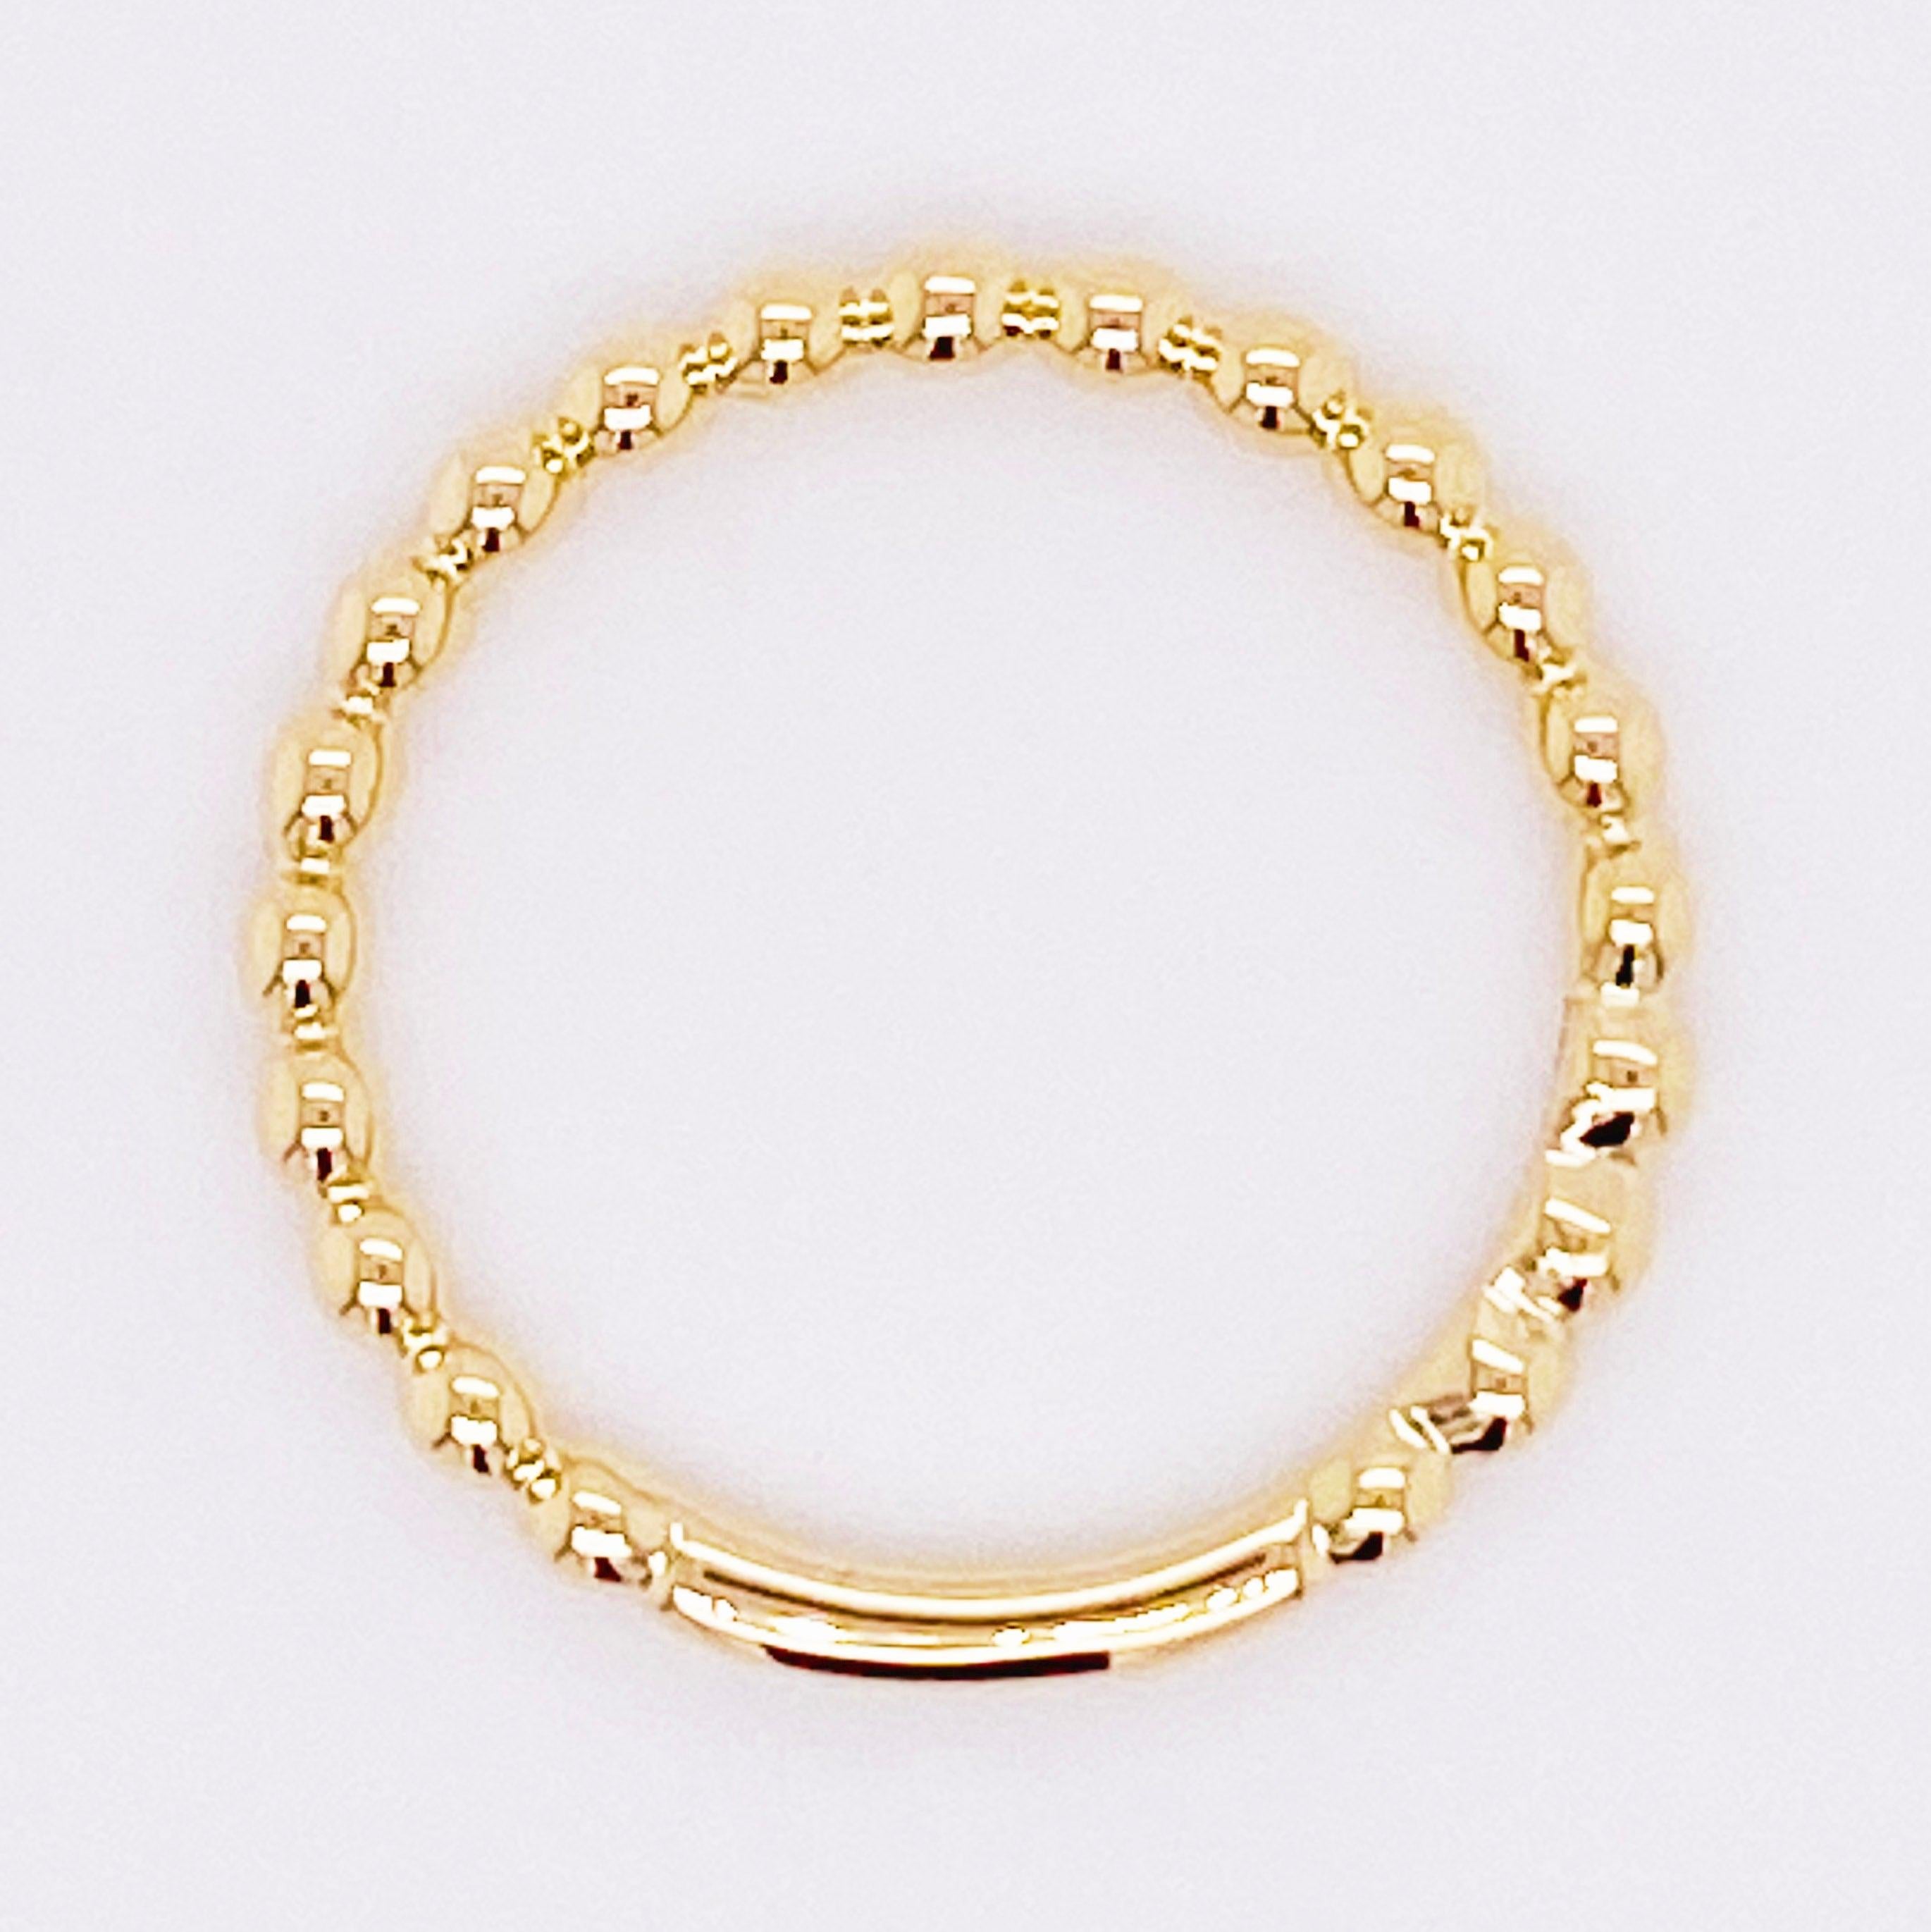 Im Angebot: Goldperlenring, 14 Karat Gelbgold Perlenring, stapelbarer Ring, 2021 Echt () 4